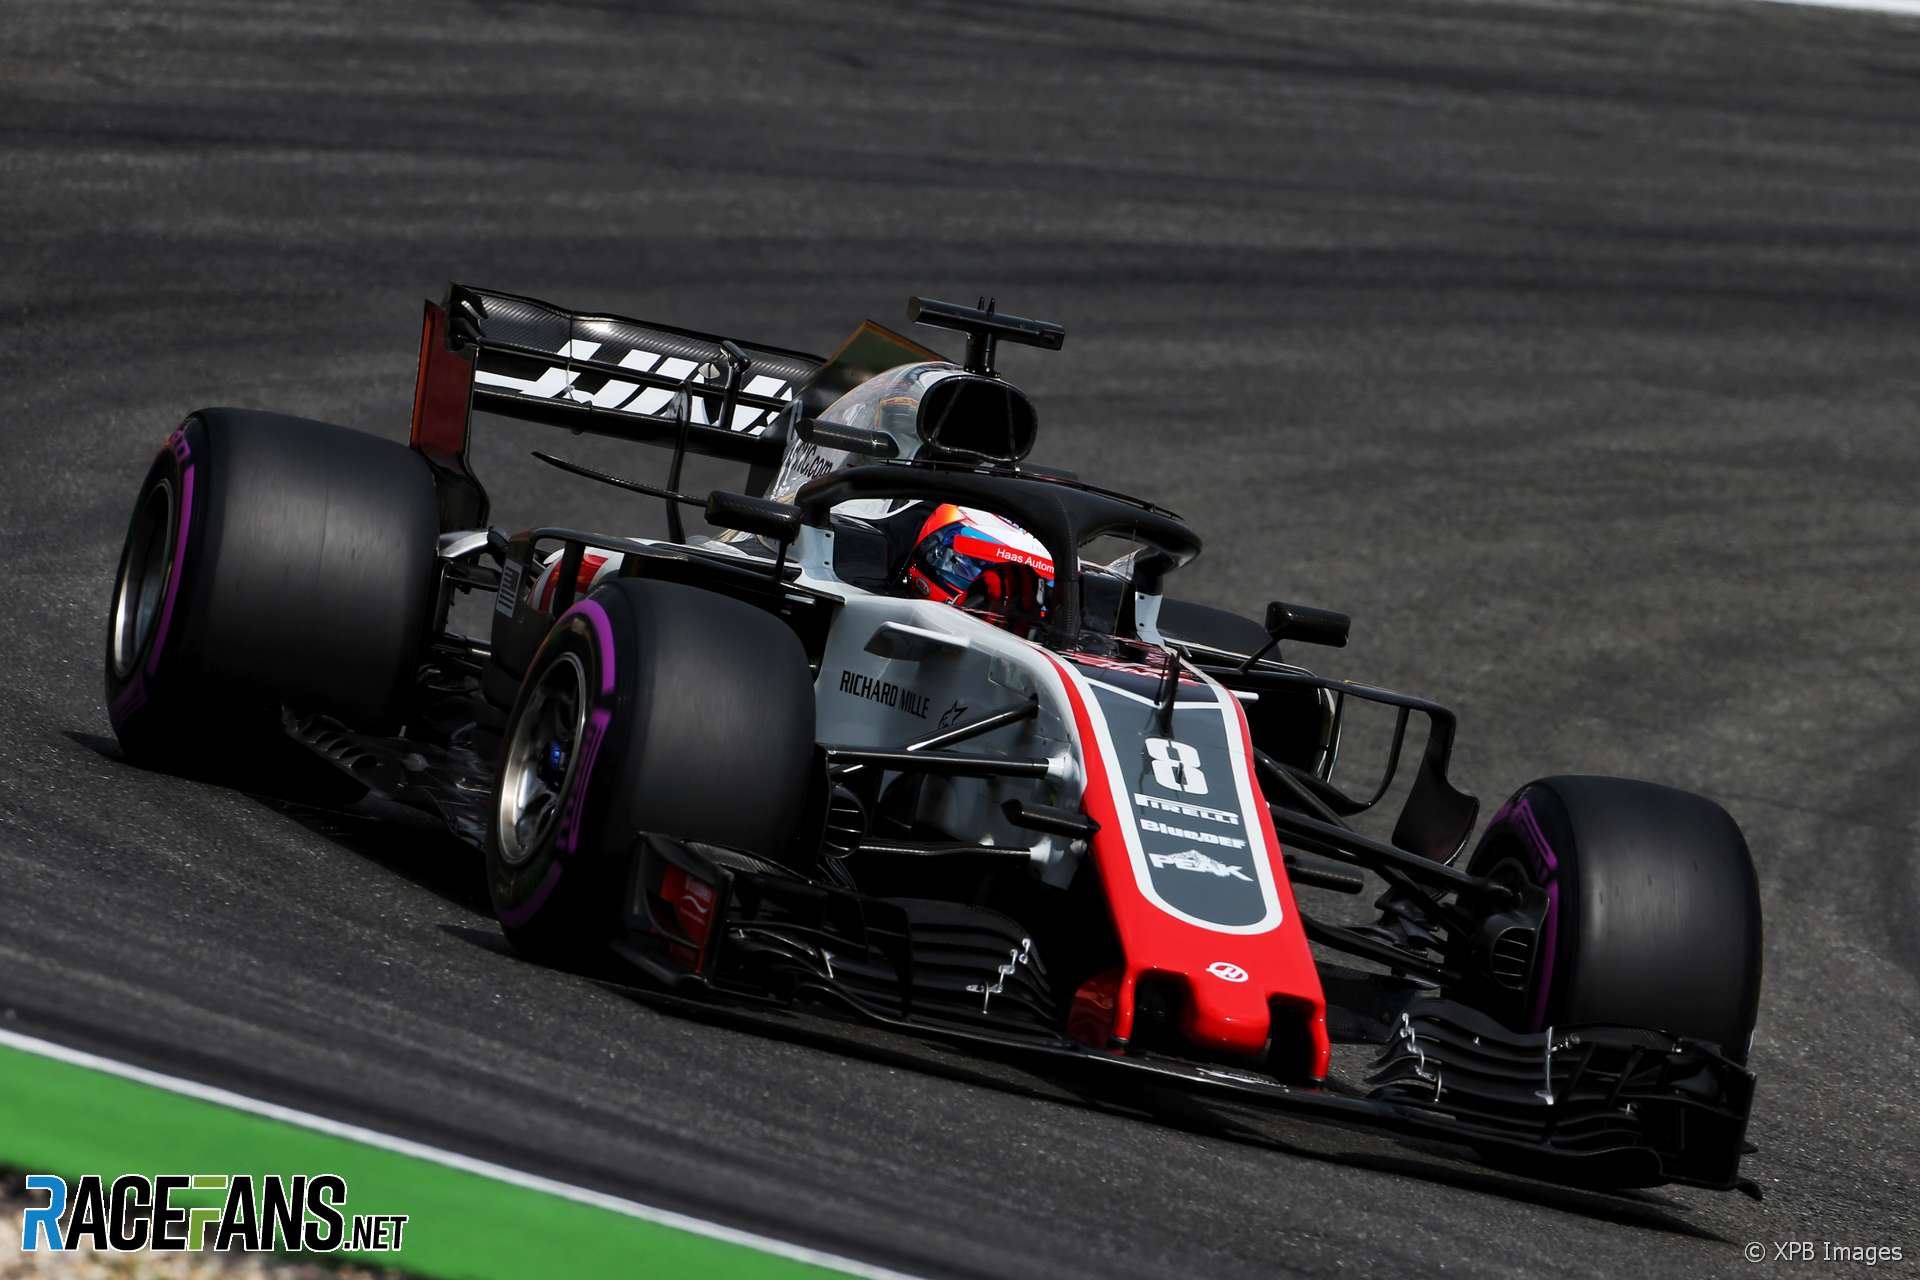 Romain Grosjean, Haas, Hockenheimring, 2018